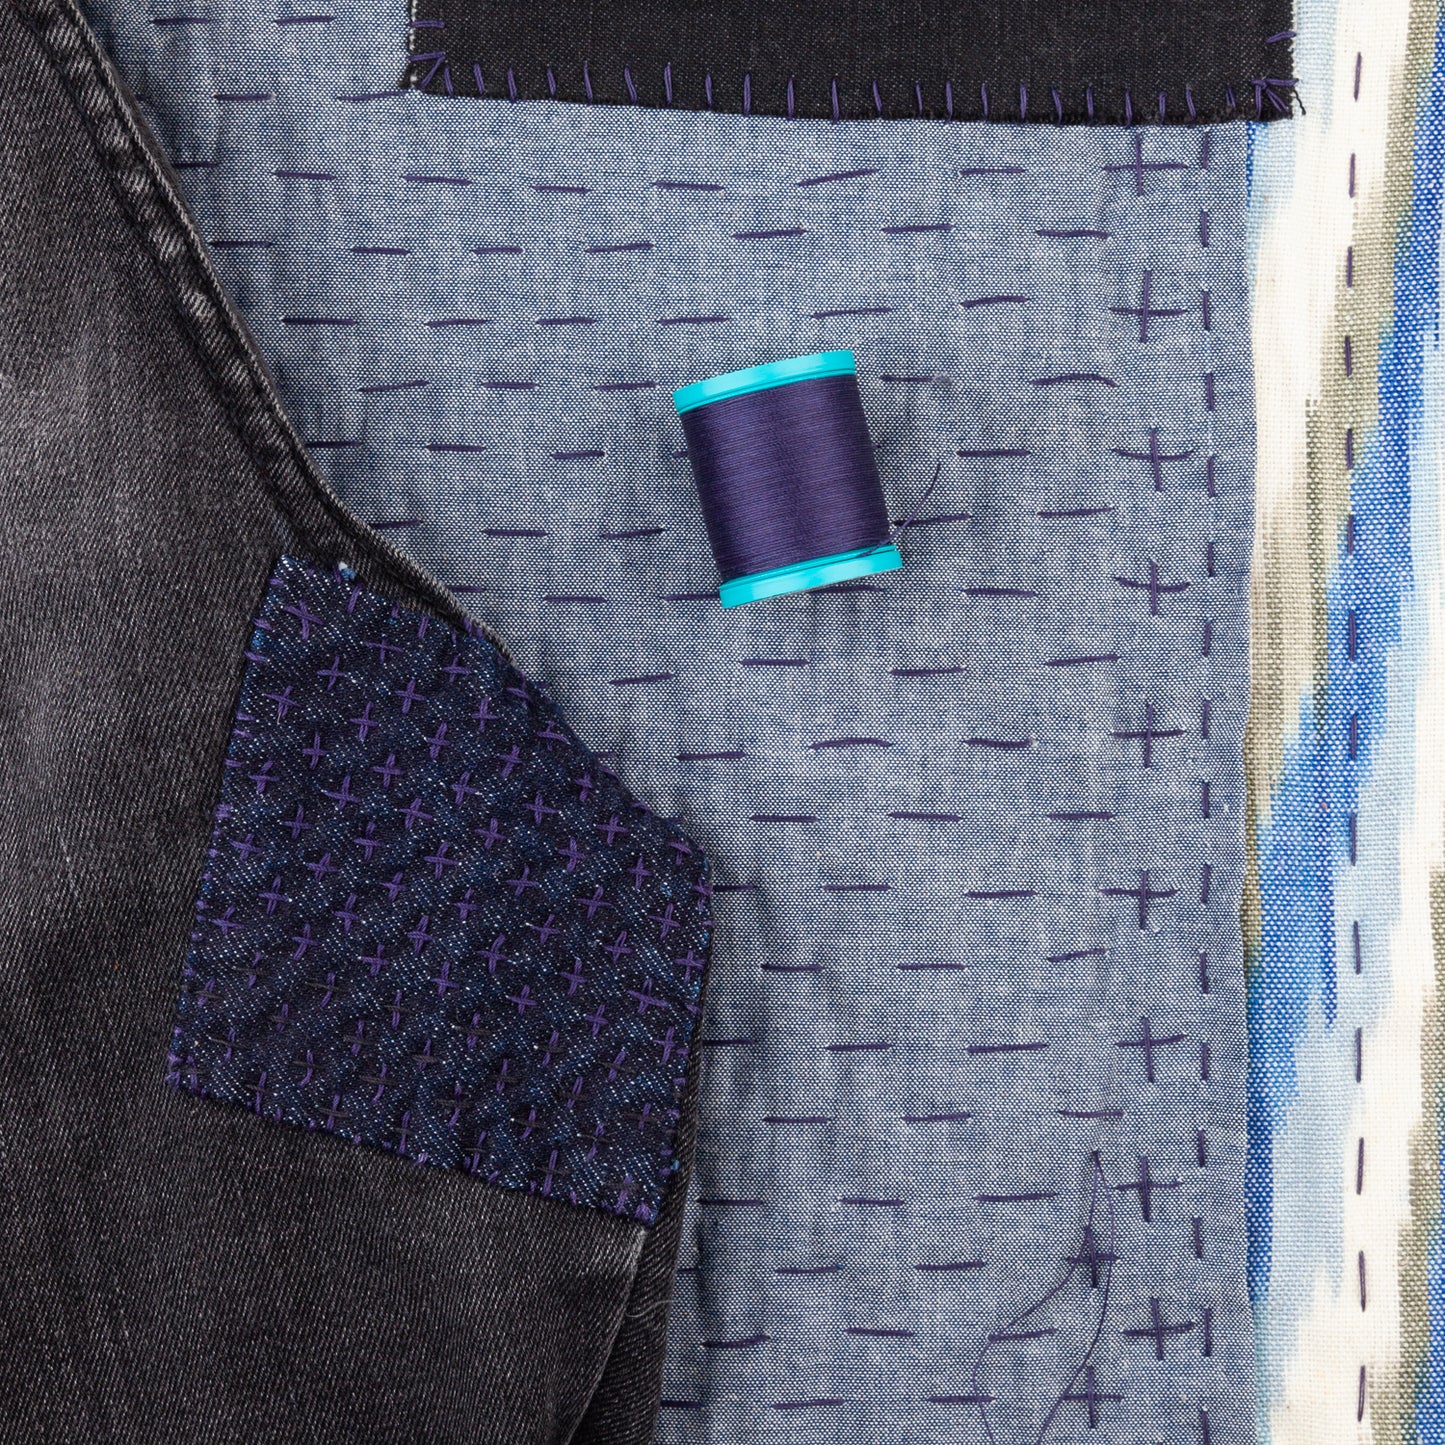 Coats & Clark Button & Craft Thread